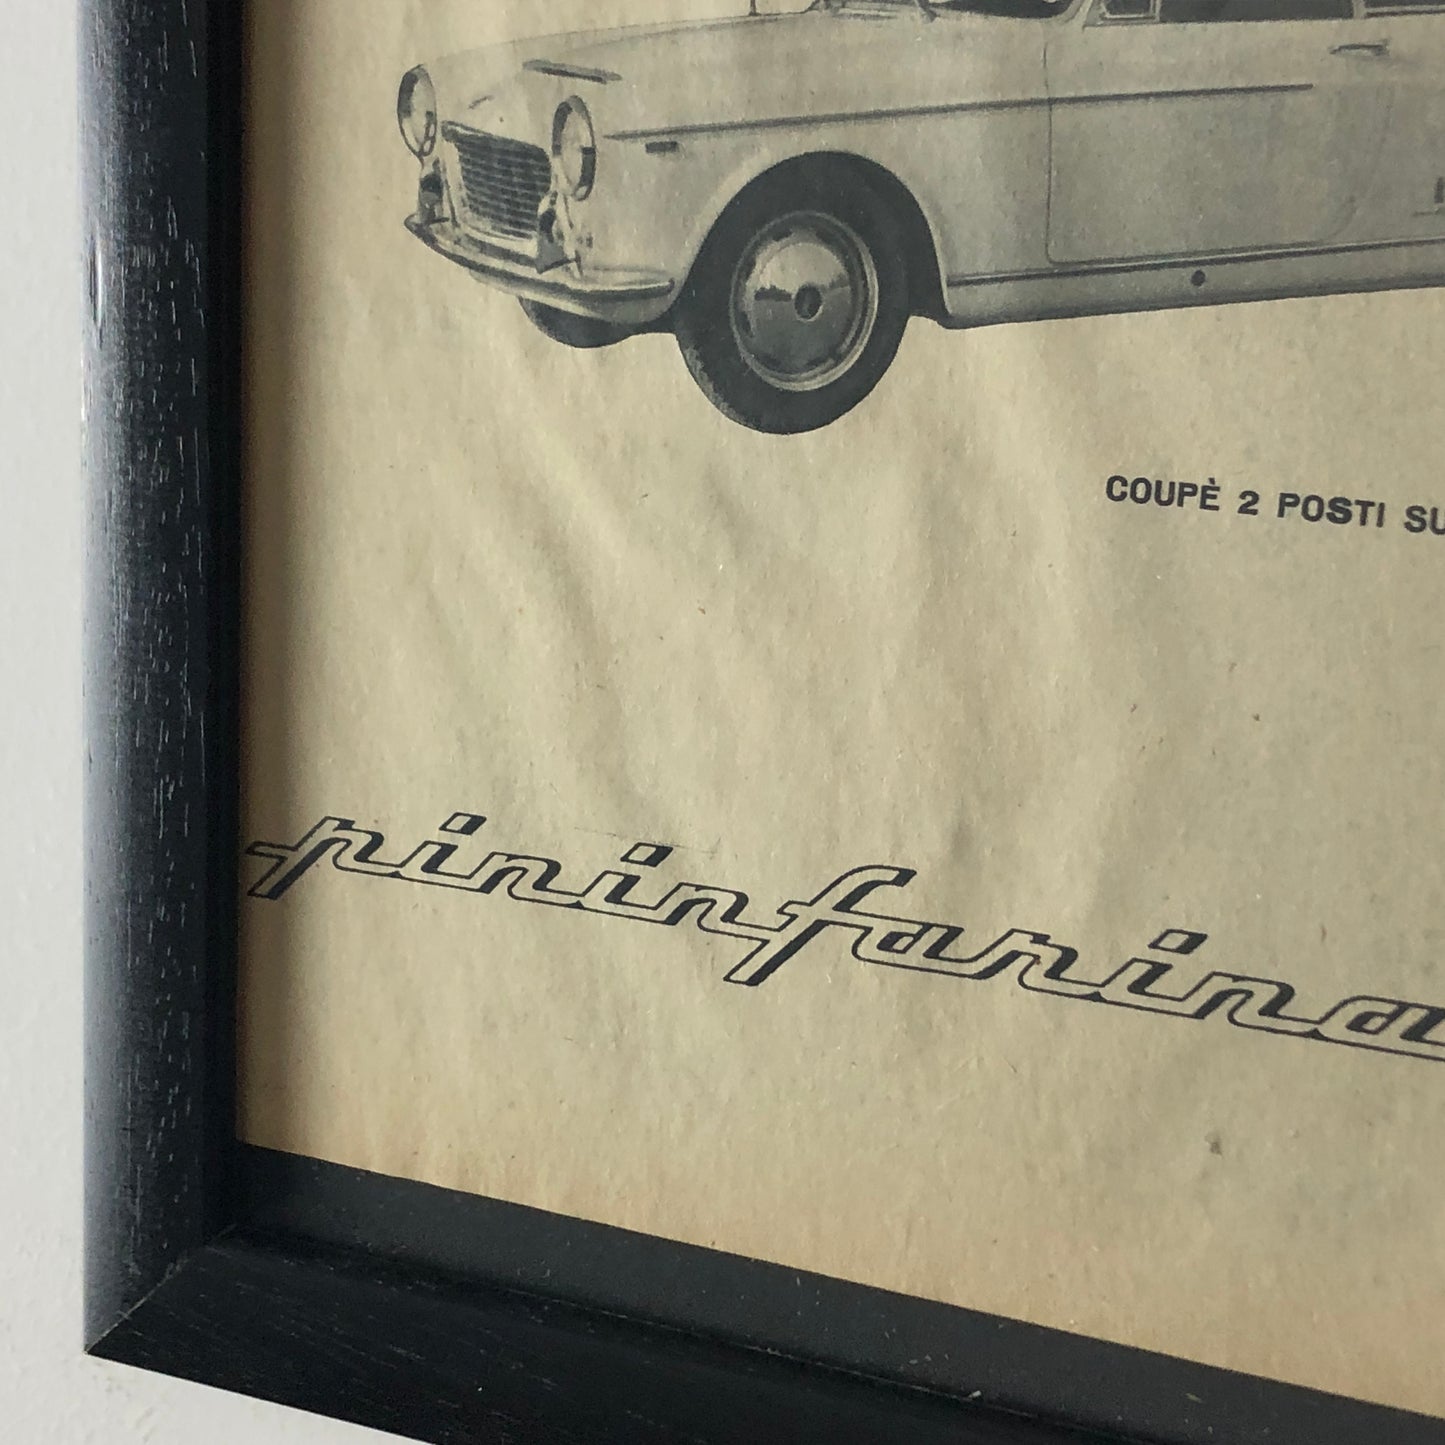 Pininfarina, 1960 Advertising Pininfarina 2 Seater Coupé on Fiat 1500 Chassis